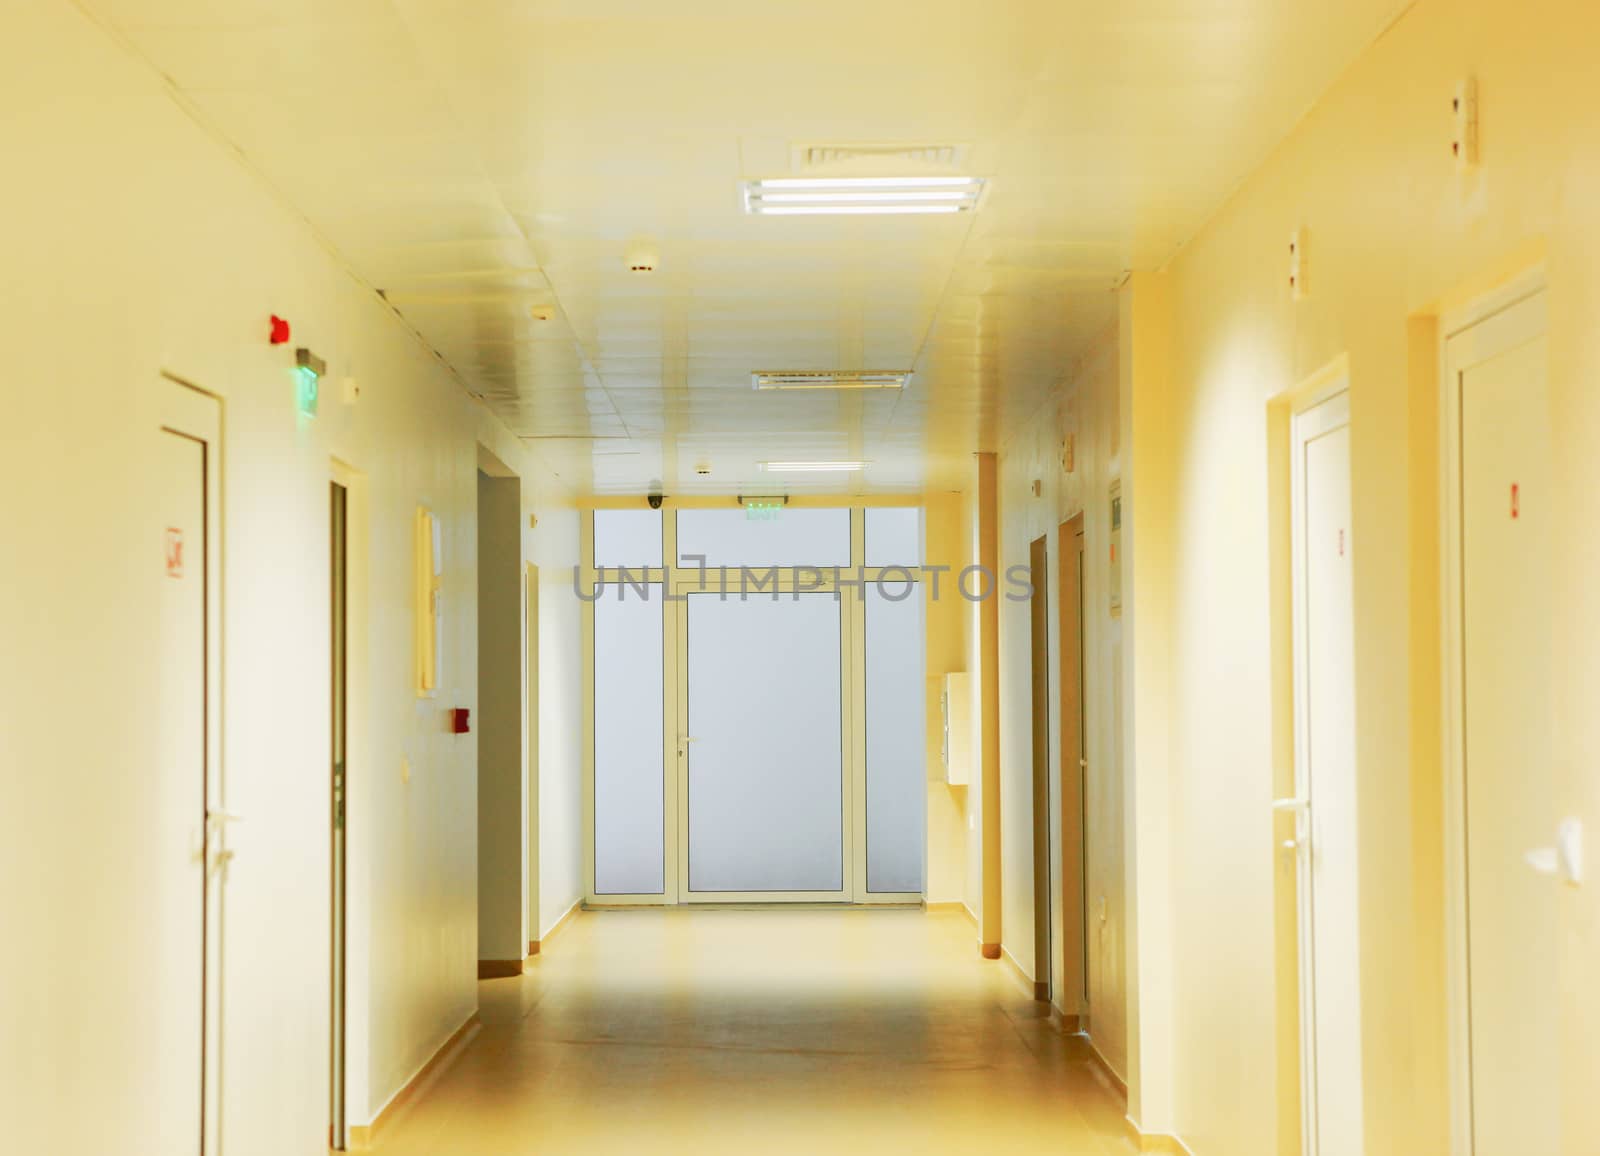 Hospital corridor in a modern clinic